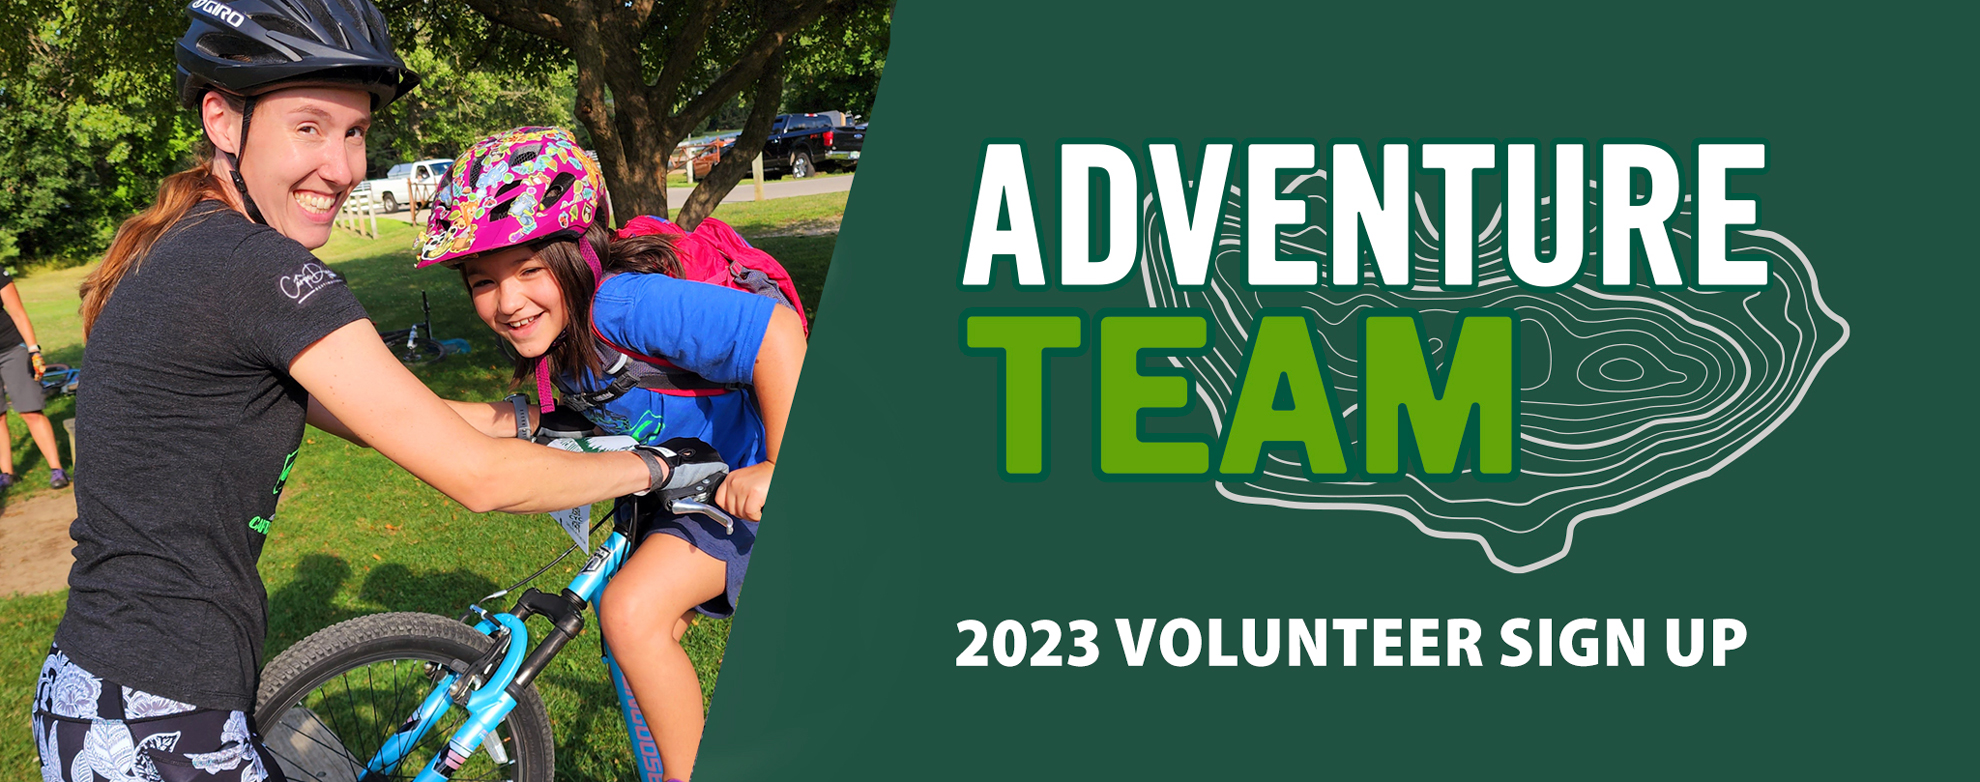 906 Adventure Team 2023 Volunteer Sign Up